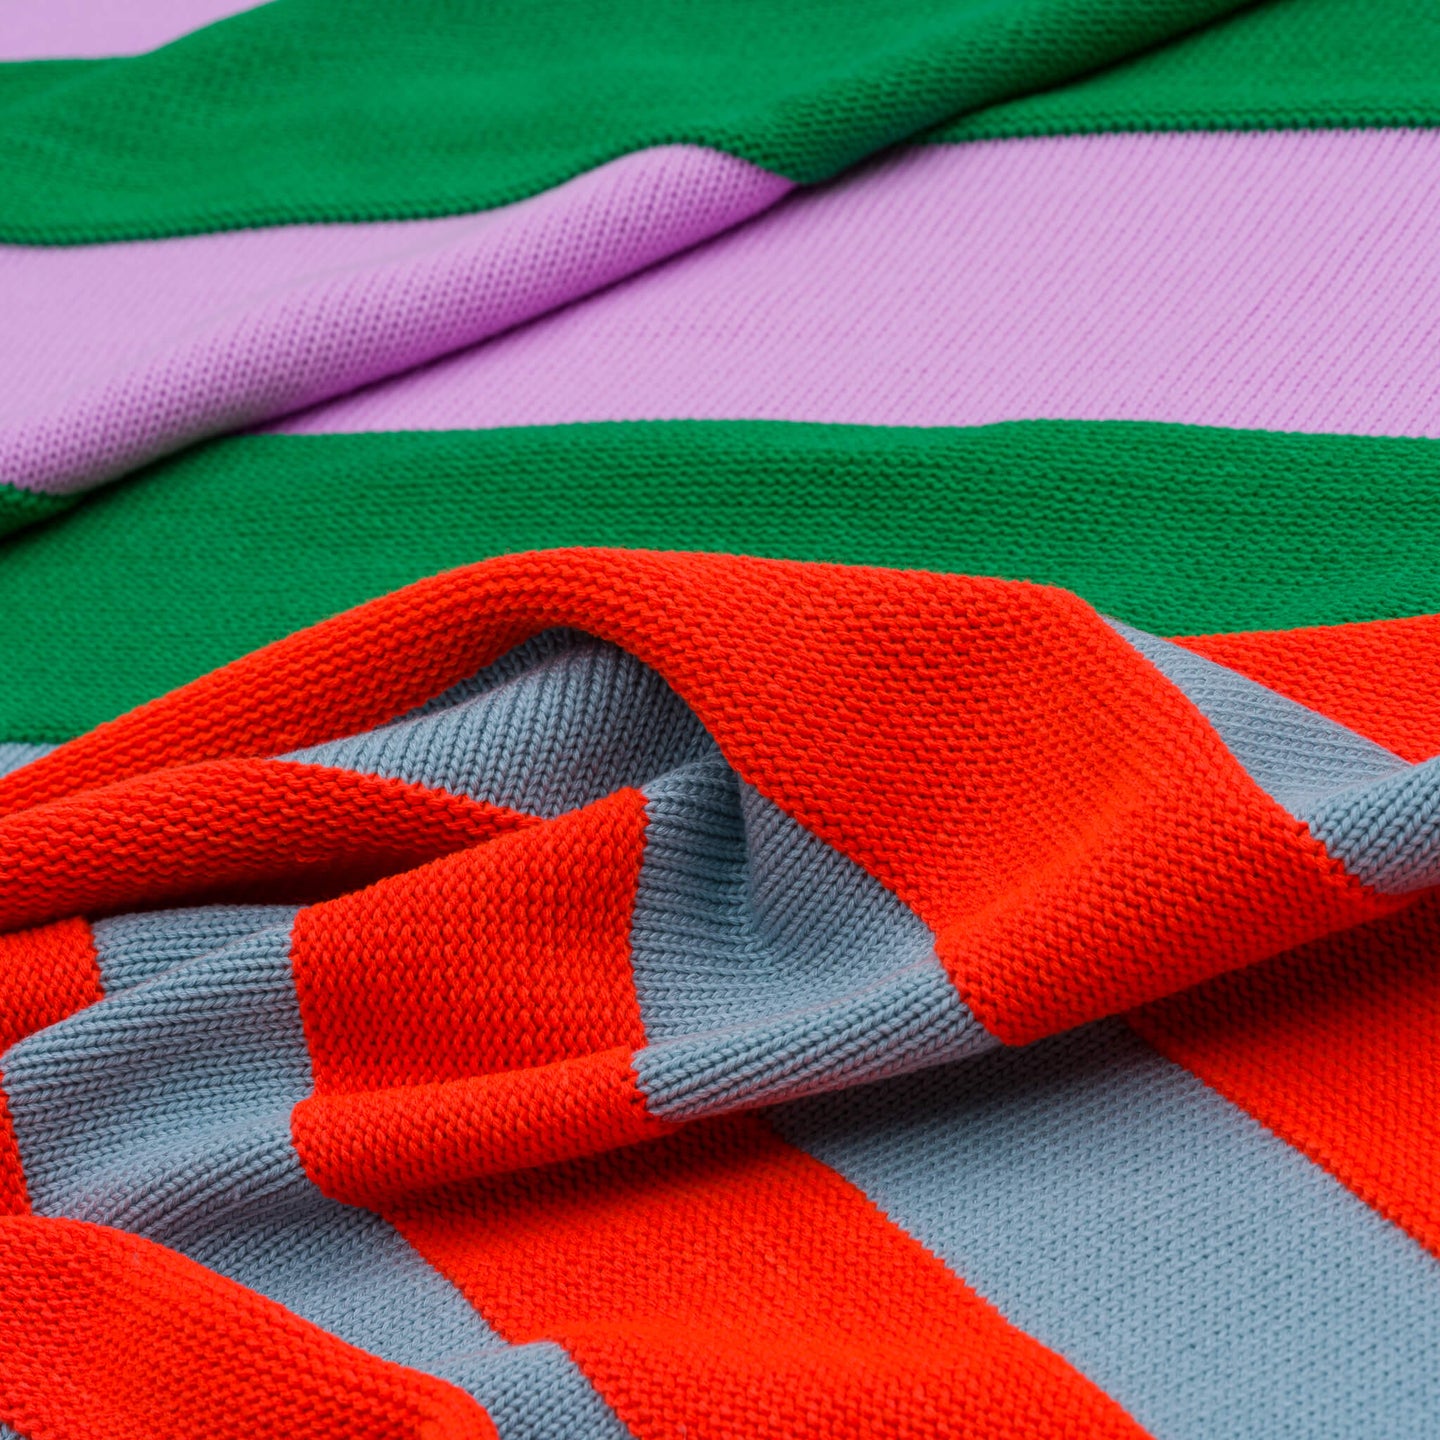 Super Stripe Textured Knit Blanket Throw Accent Sofa Piece Cozy Stripes Green Purple Lilac Detail Close Up Raised Stripe